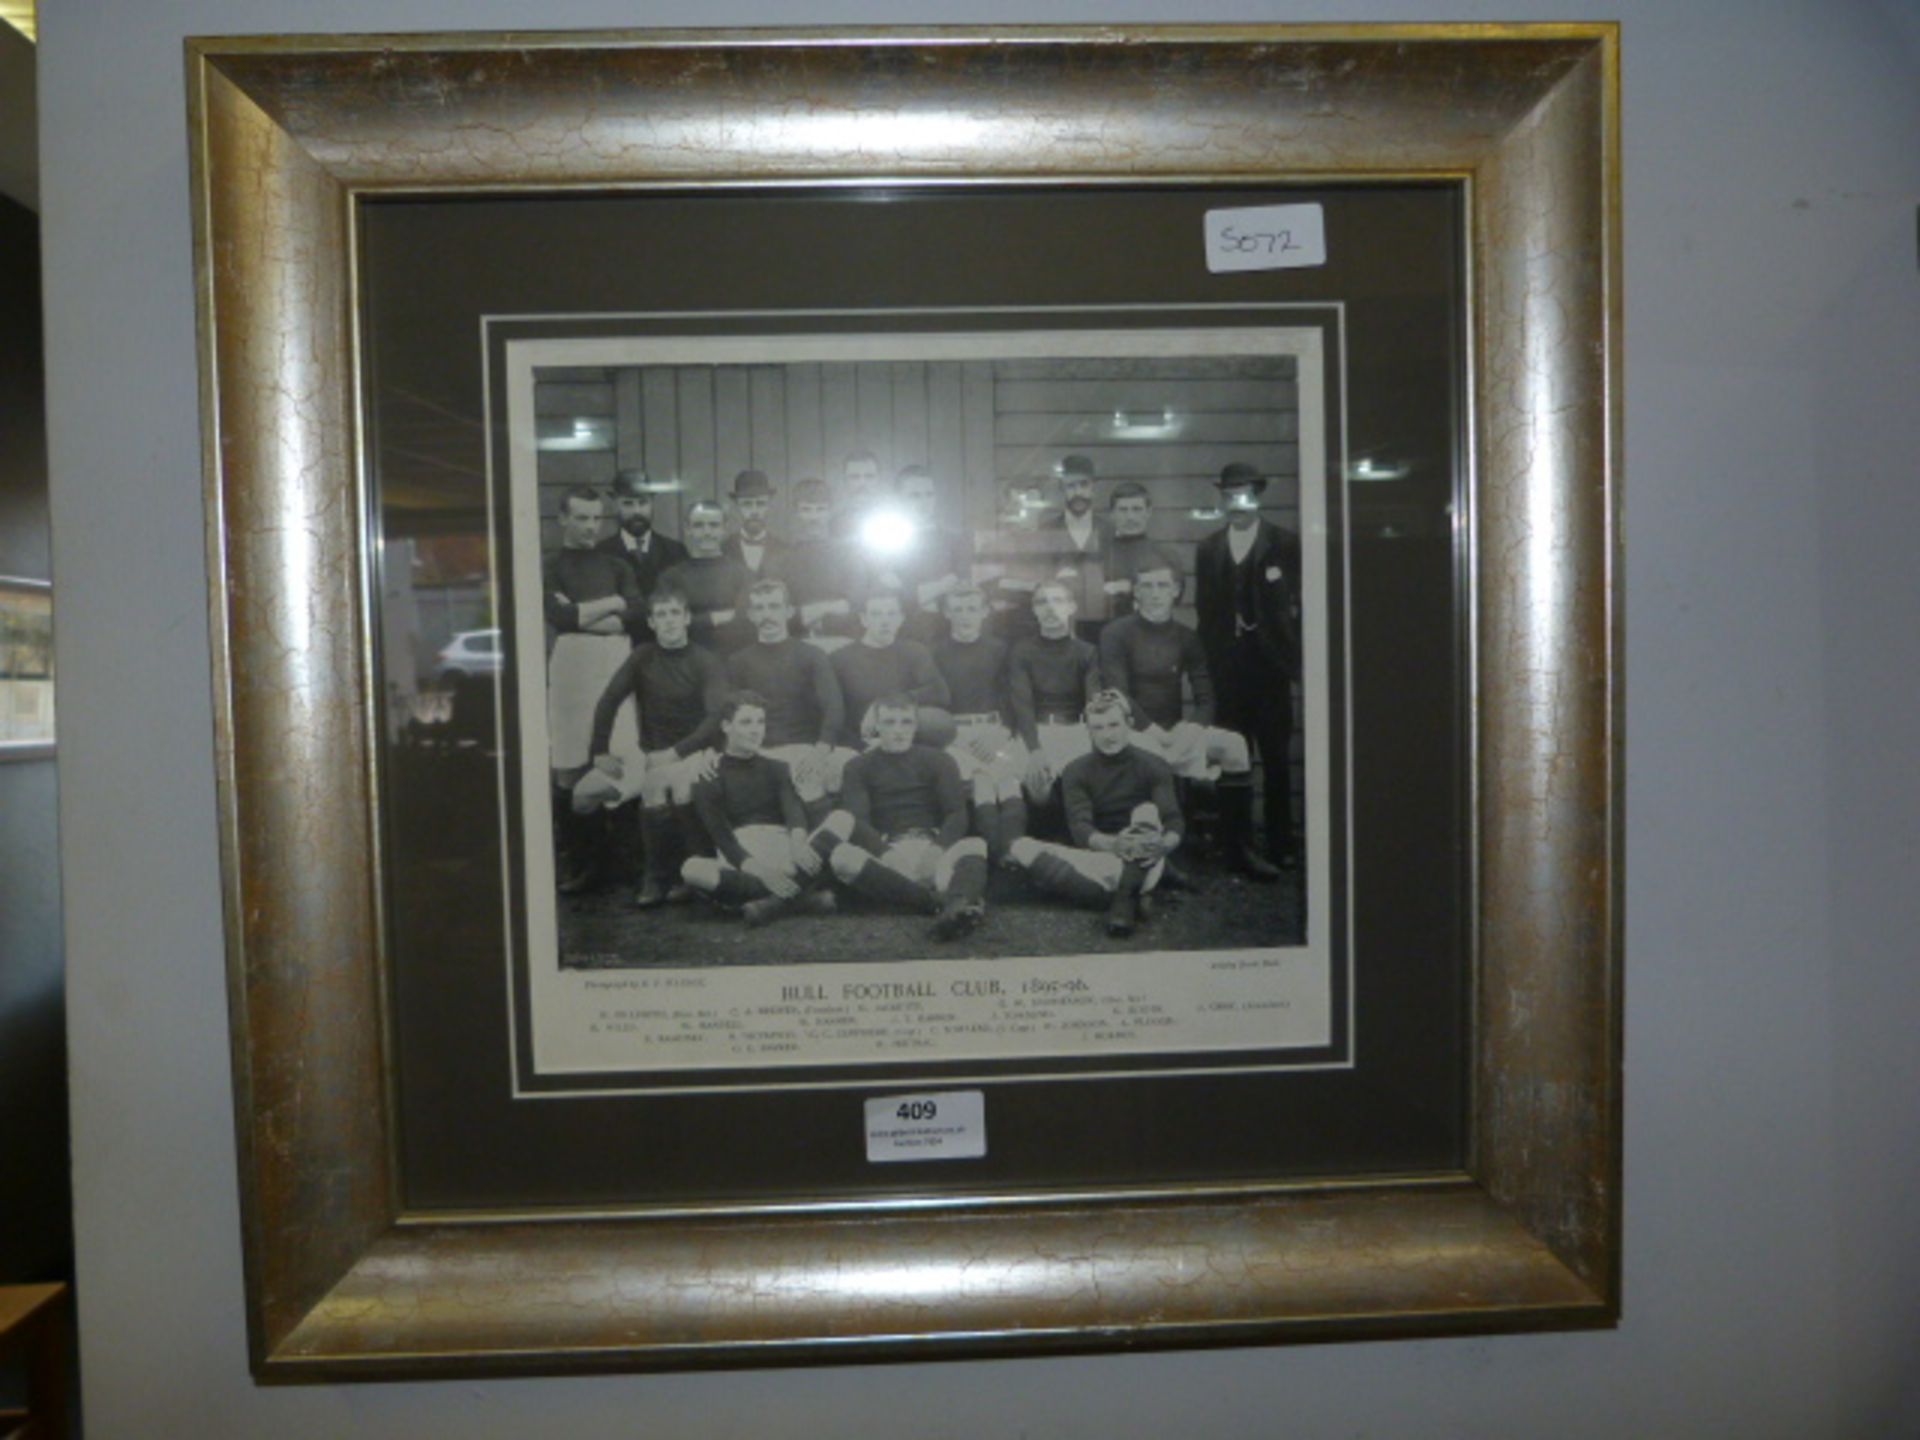 Framed Photo Print "Hull Football Club 1895/96"